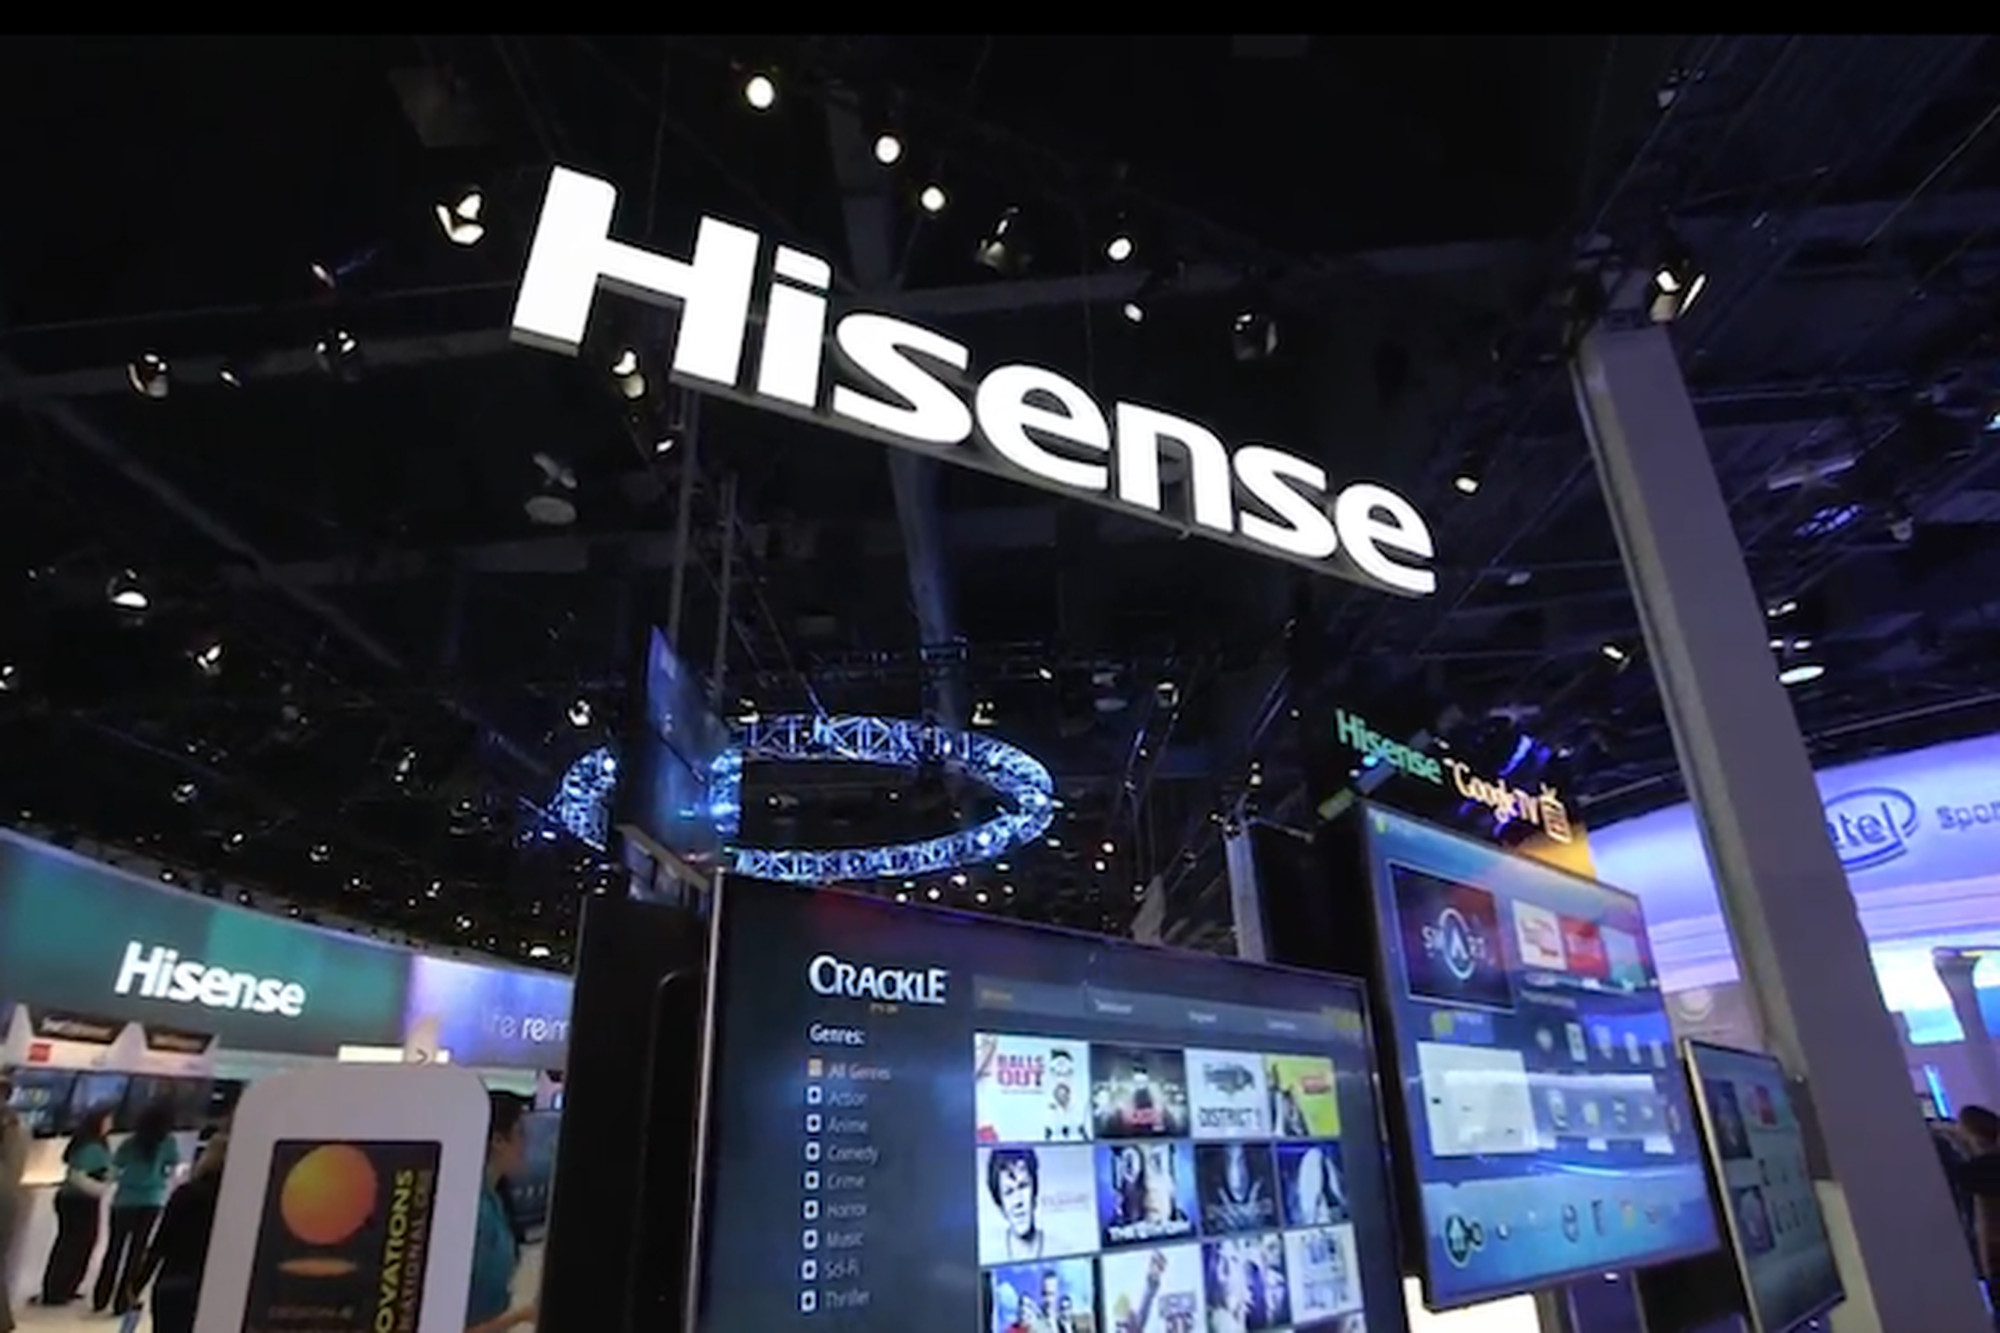 Toshiba sells its electronics department to Hisense - The Verge